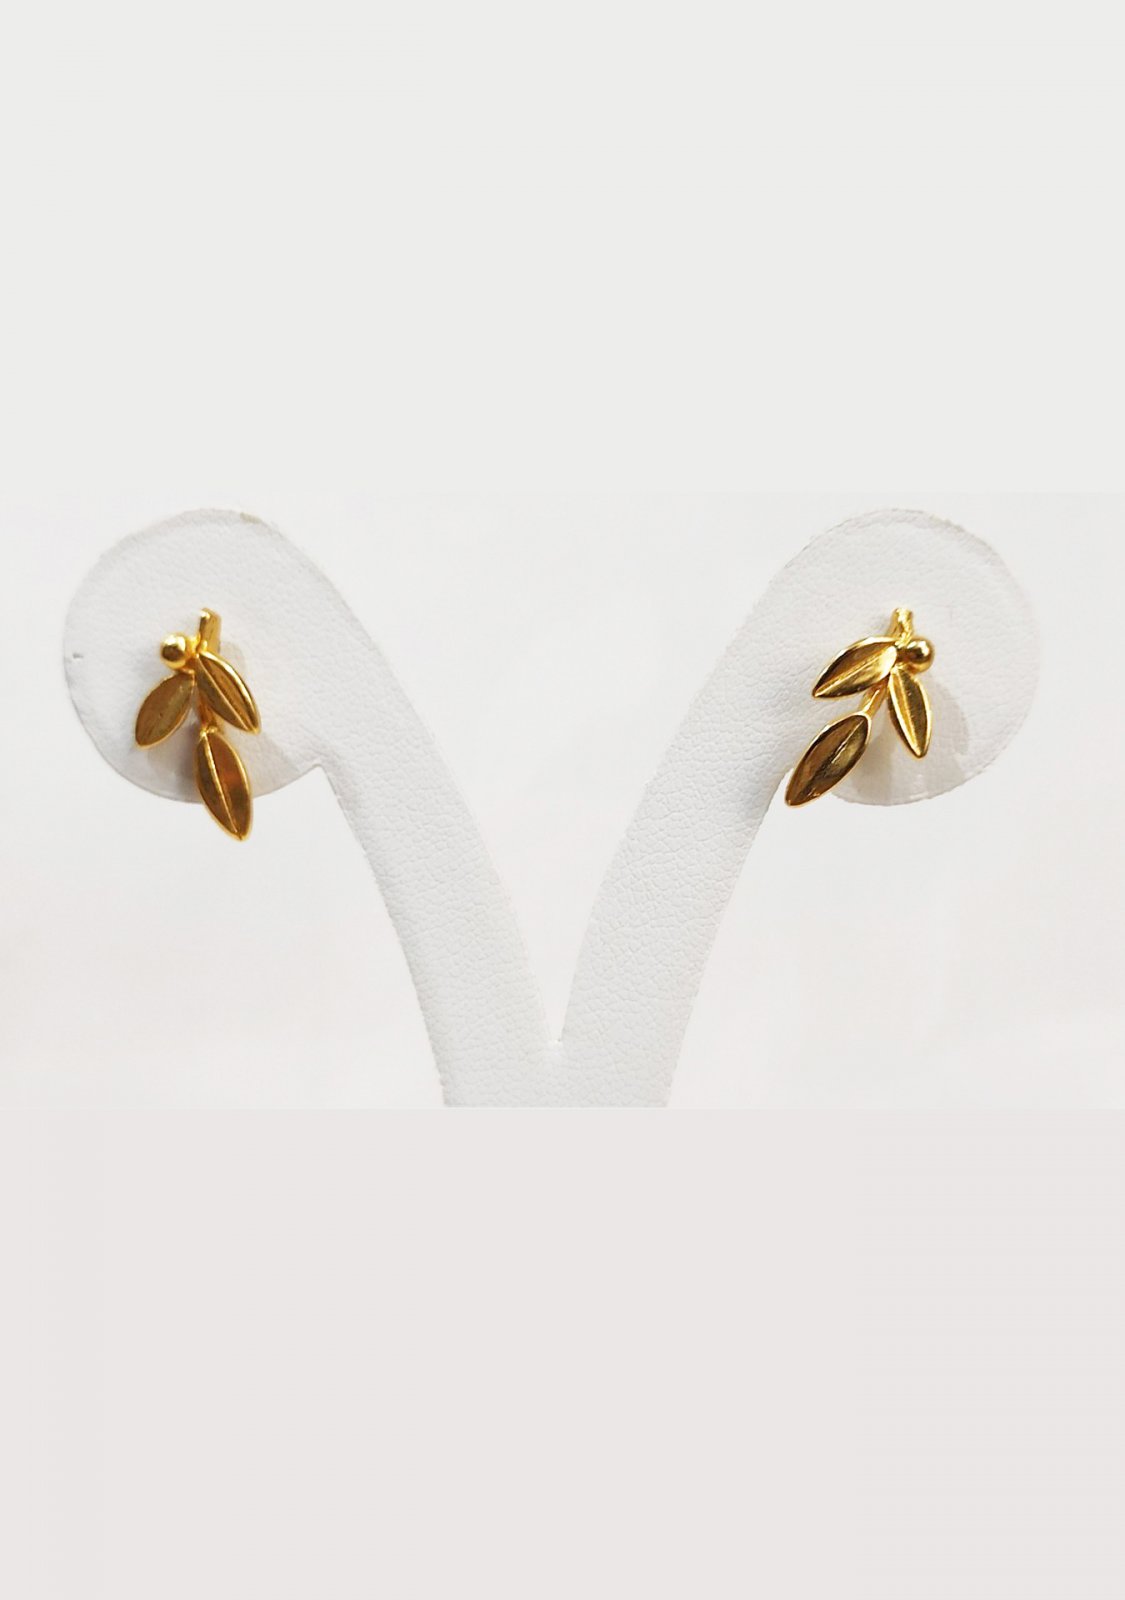 Greek olive branch gold plated silver stud - dangle earrings